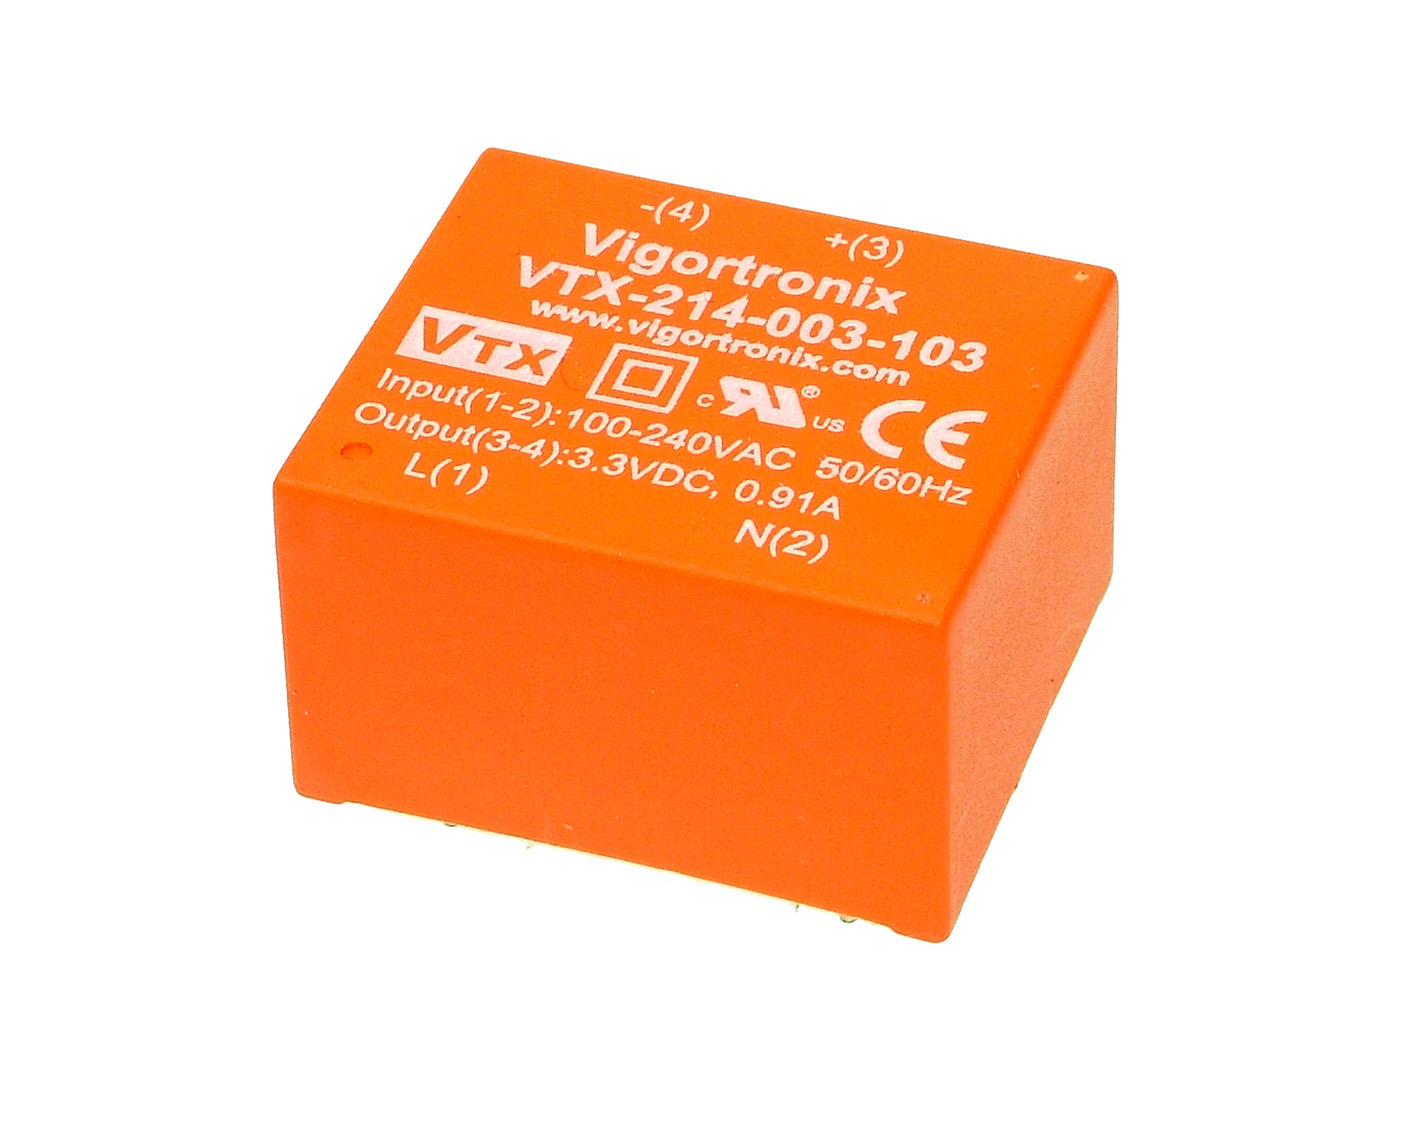 Vigortronix VTX-214-003-1 AC-DC Converter 3 Watt